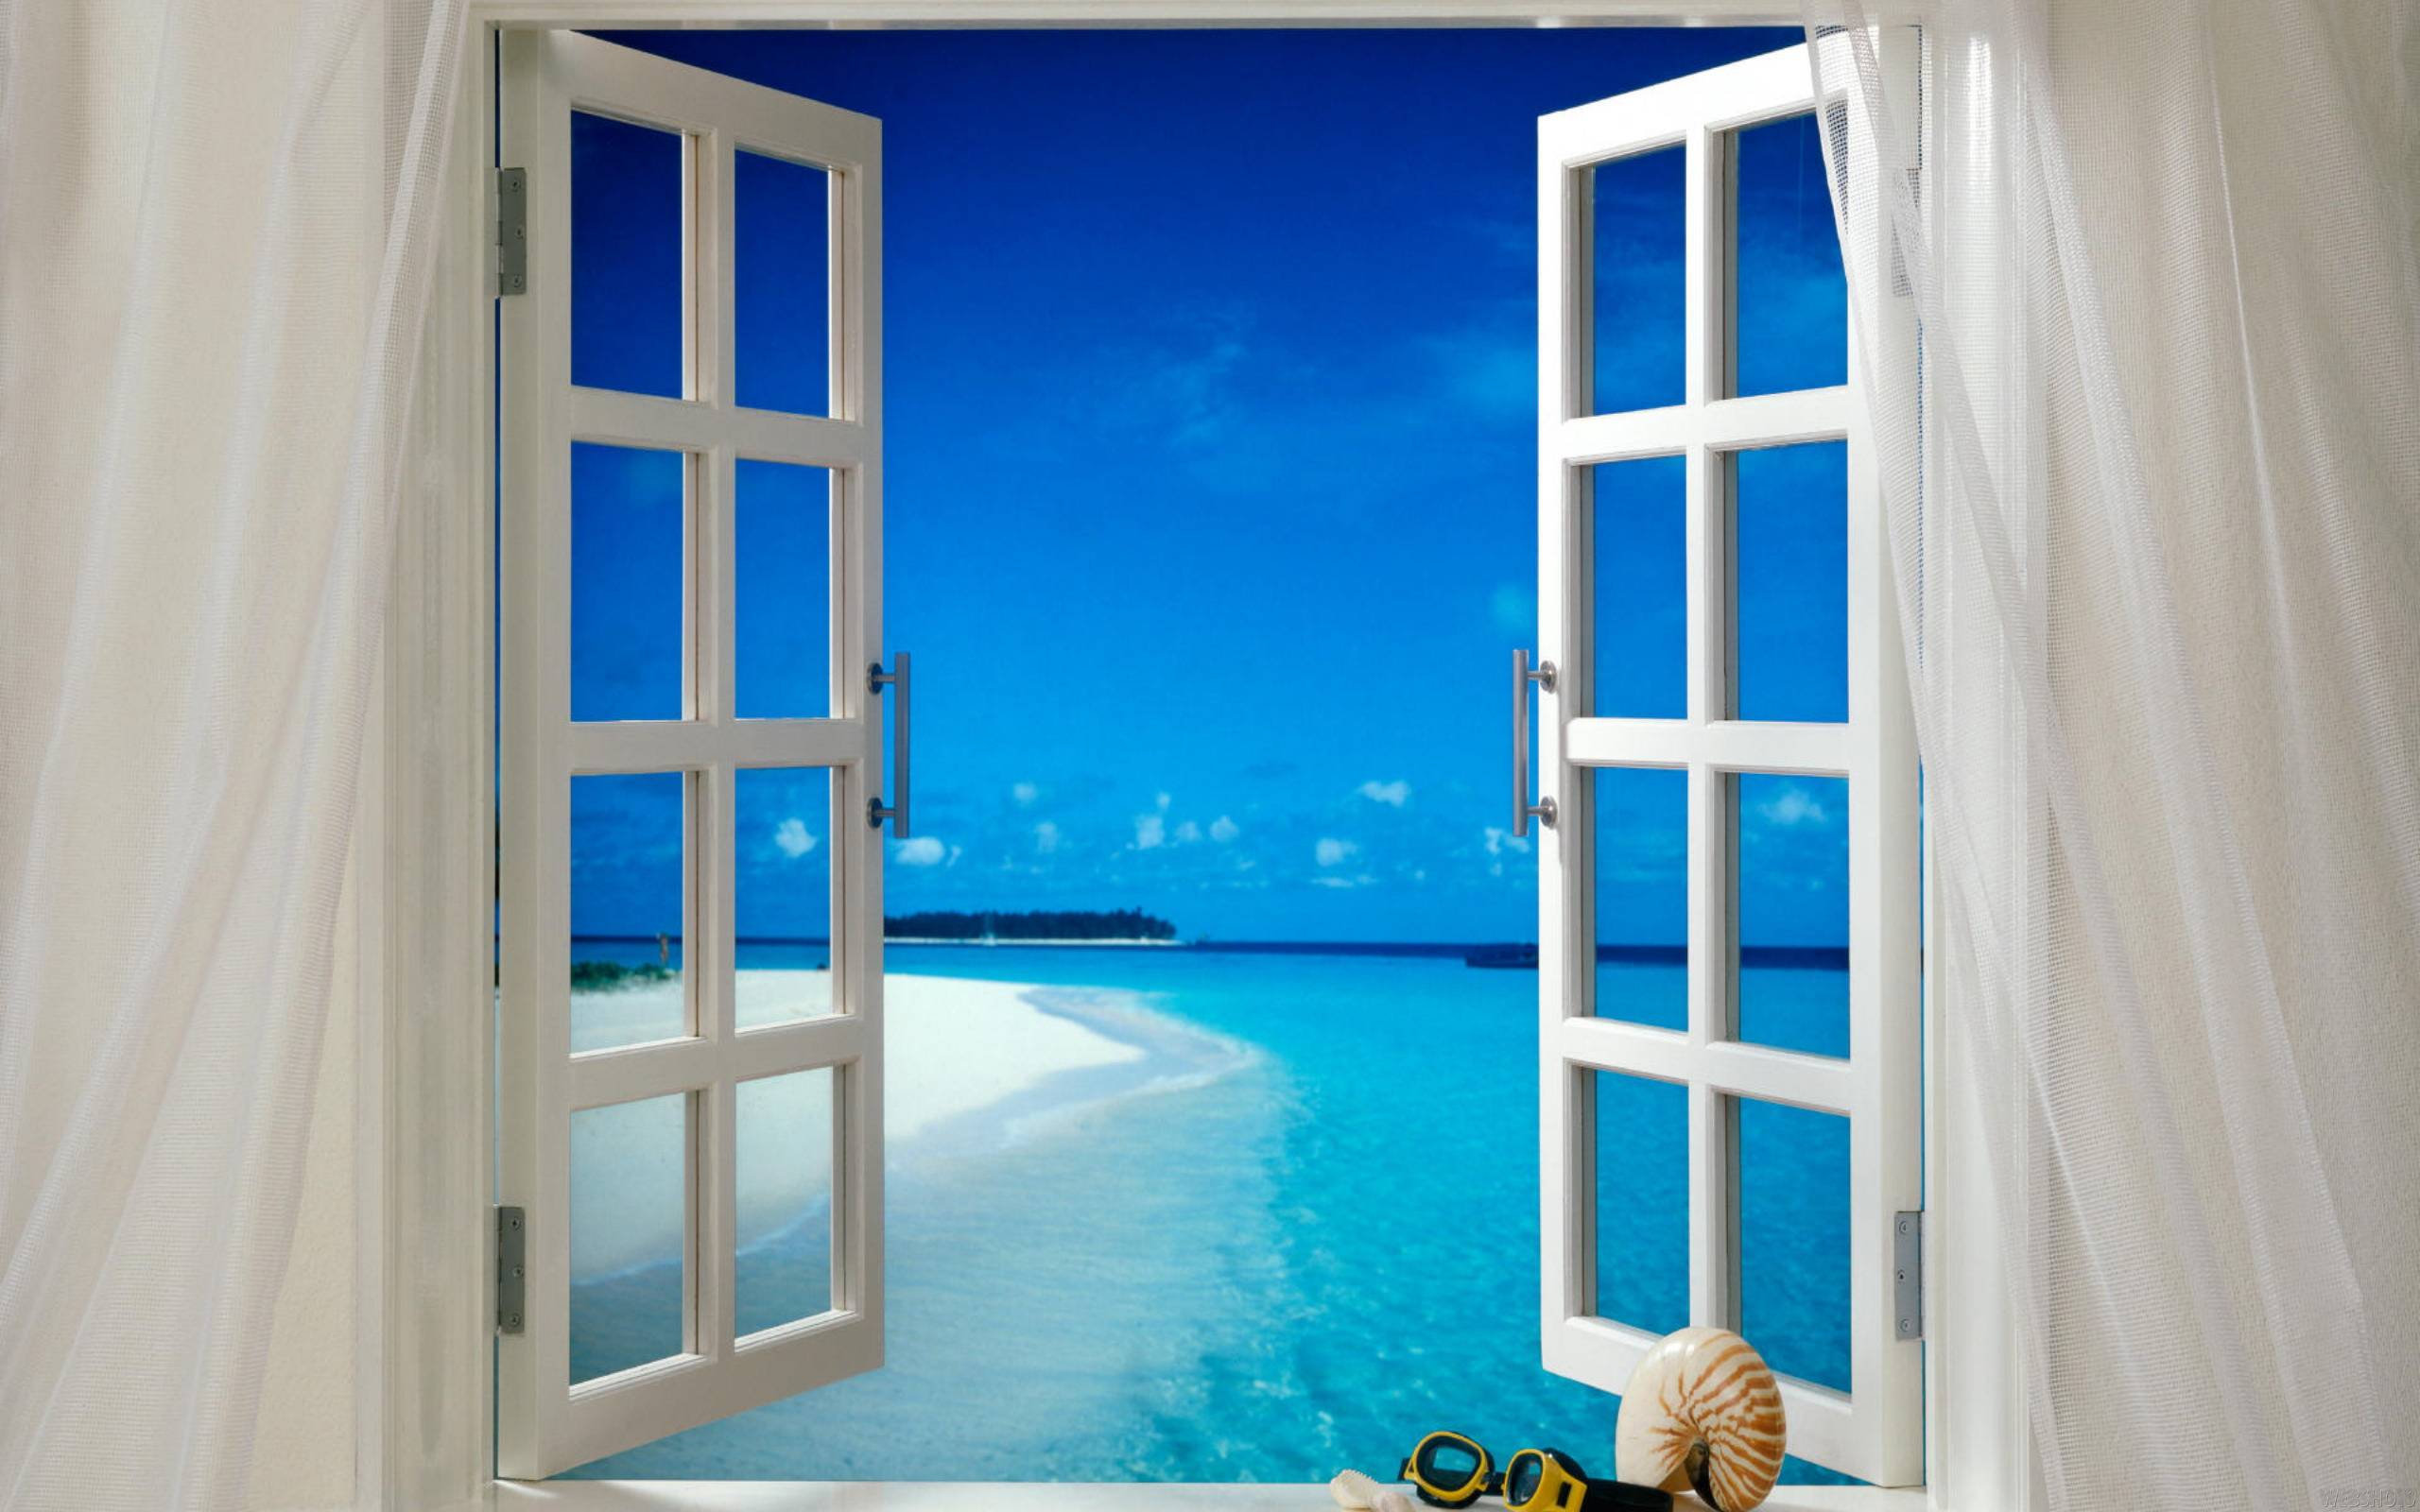 🔥 48 Beach Window Wallpaper Wallpapersafari